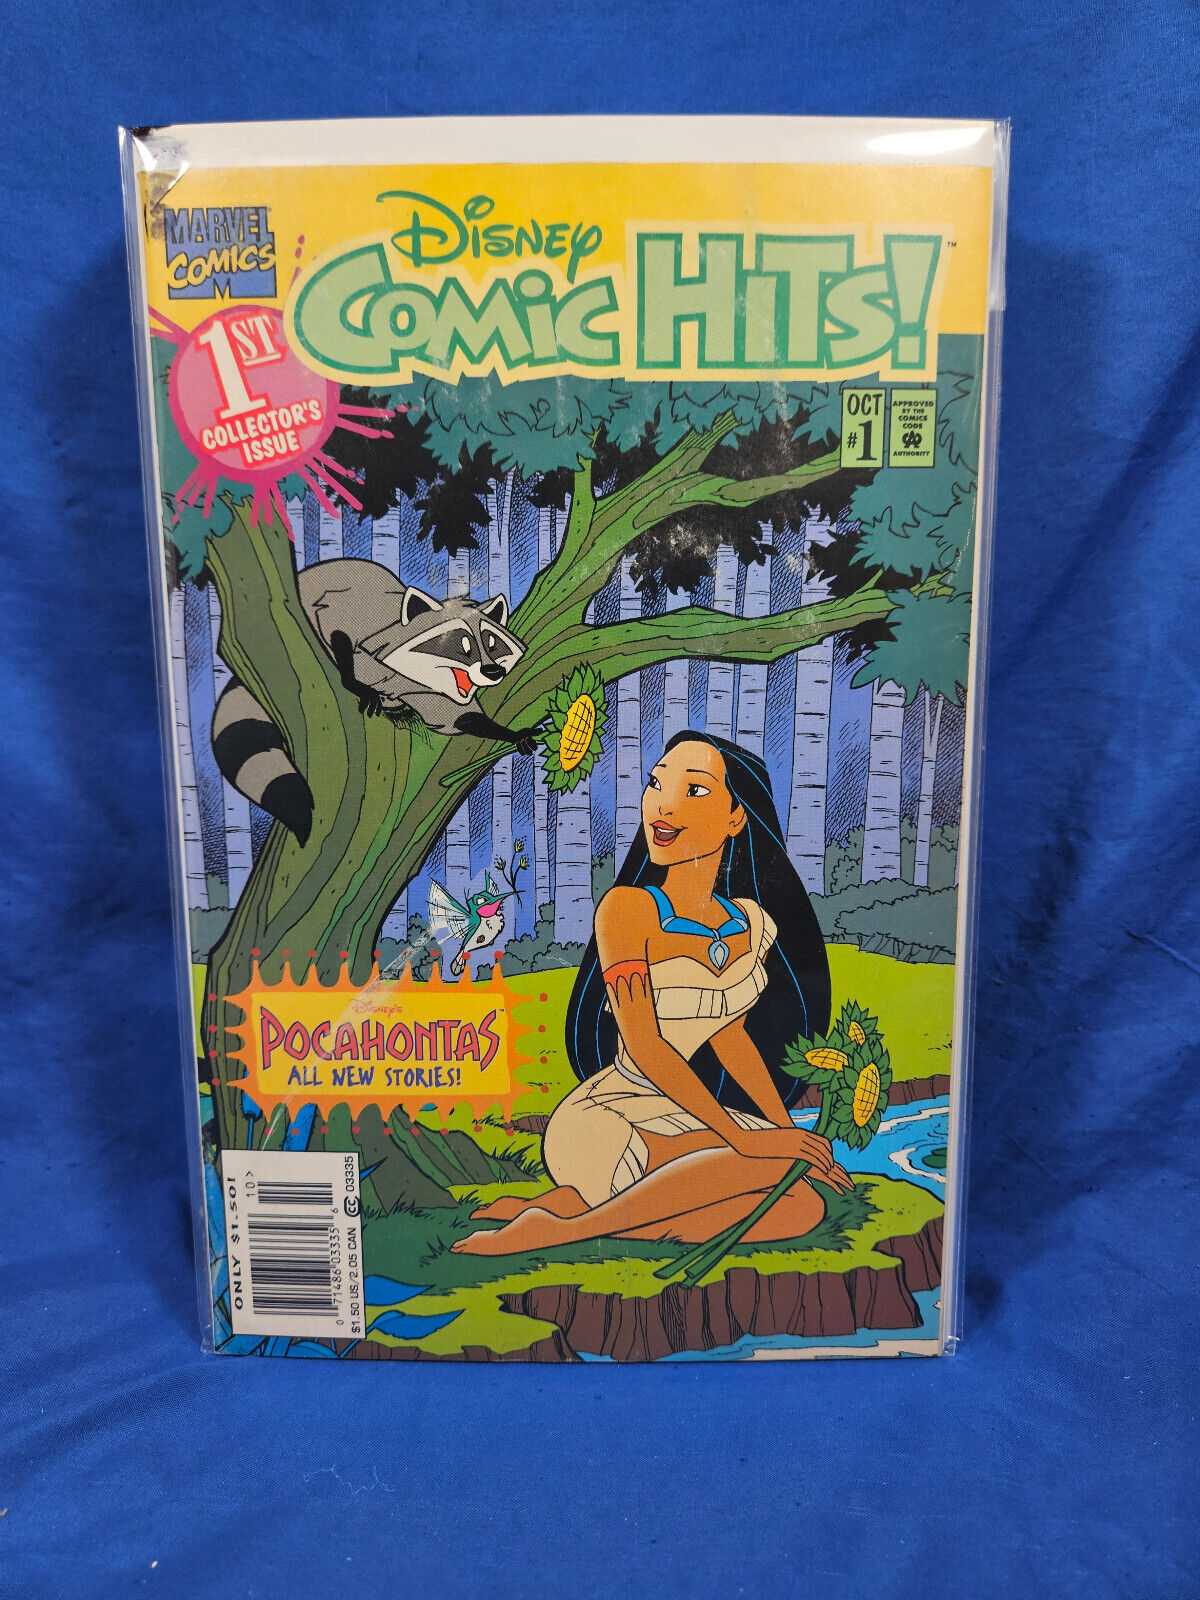 Vintage 1995 Disney\'s Comic Hits #1 Pocahontas Newsstand Edition FN/VF